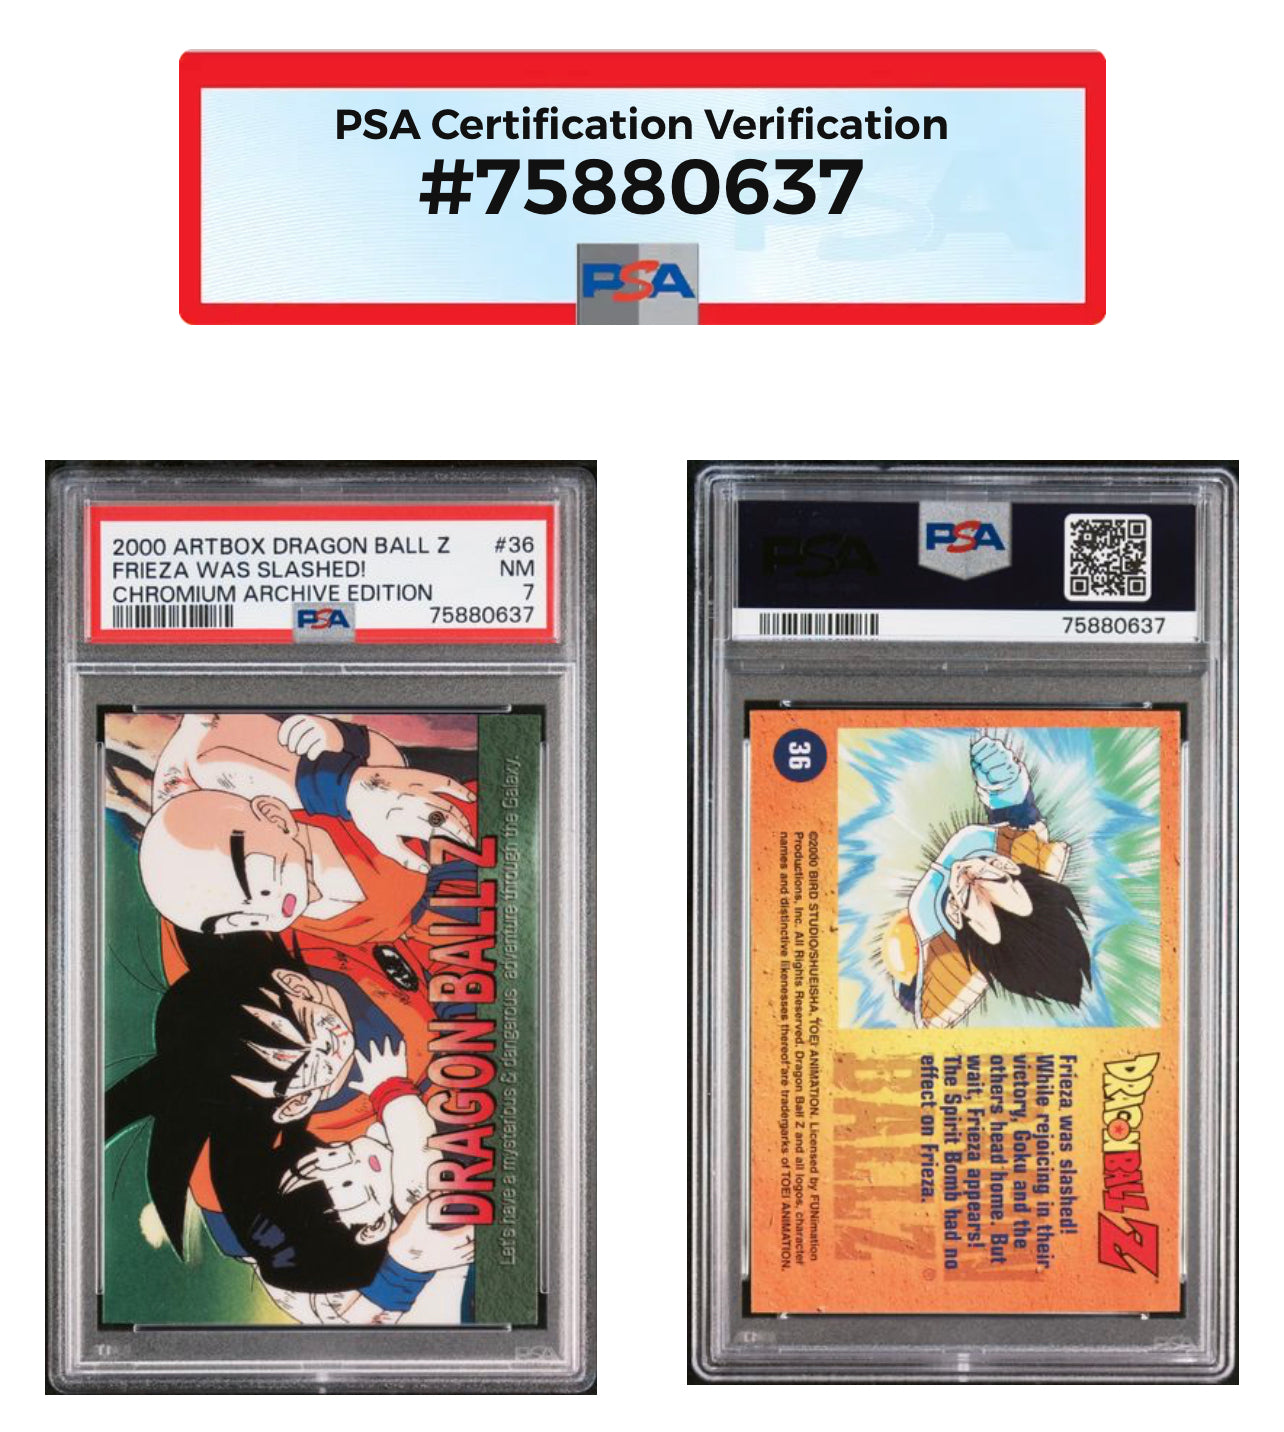 2000 Artbox Dragon Ball Z Chromium Archive Edition PSA Graded Card Lot (5)